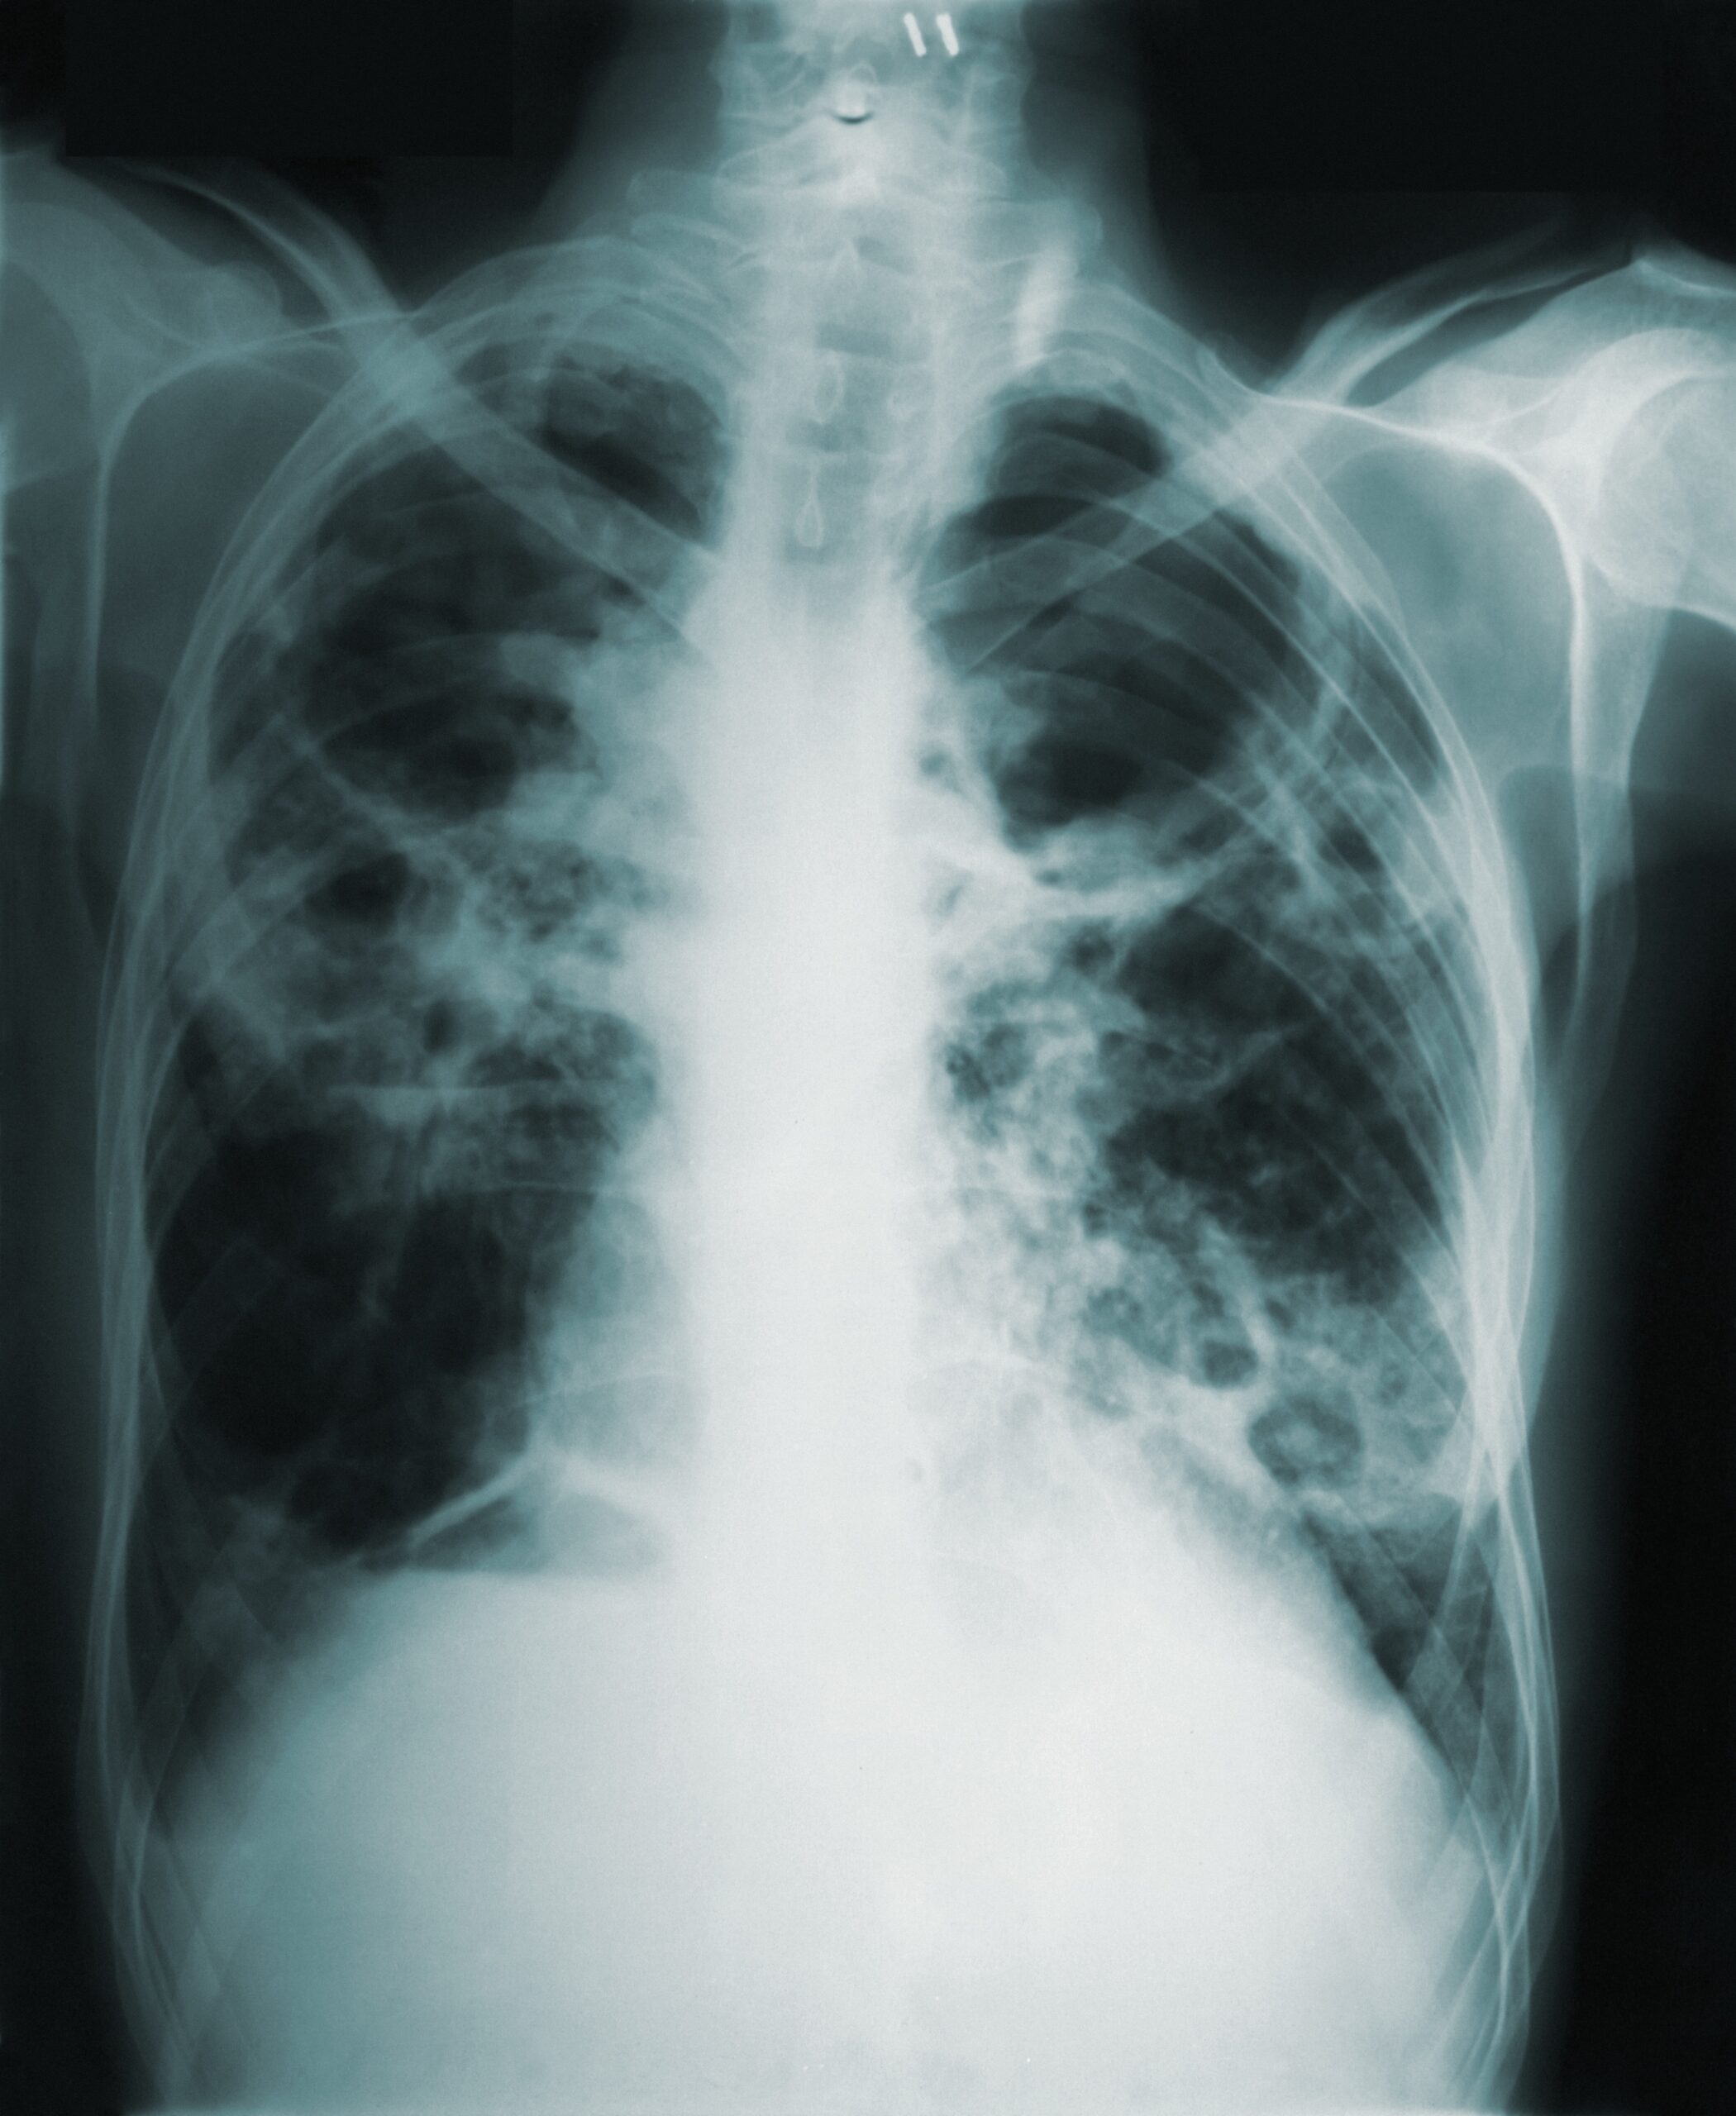 X-ray of body